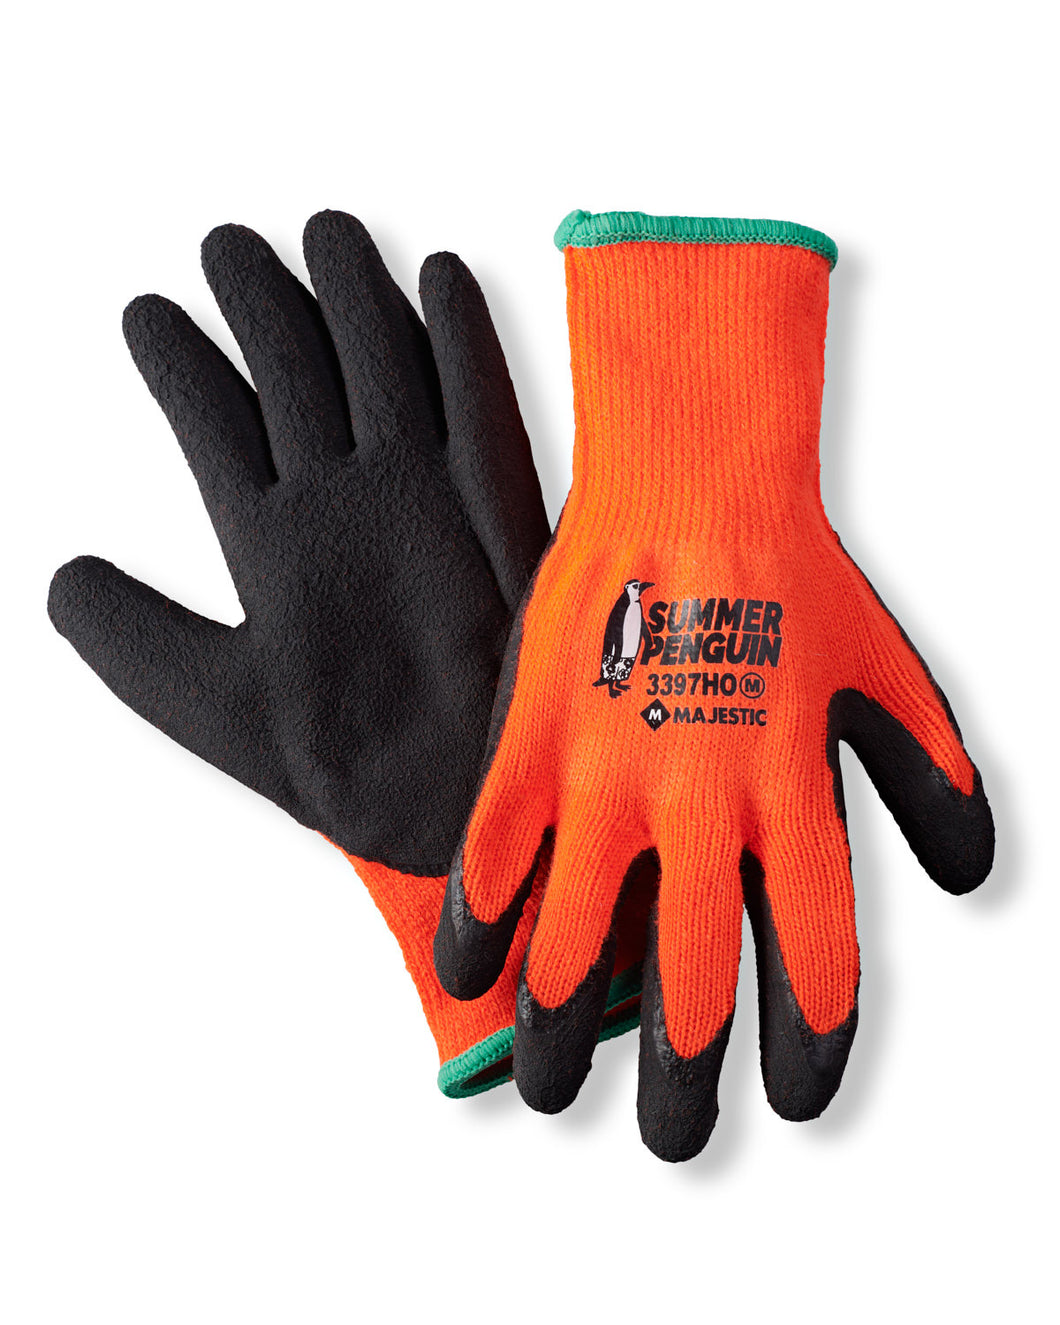 Summer Penguin Gloves Hi-Visibility Orange 12 Pair Pack